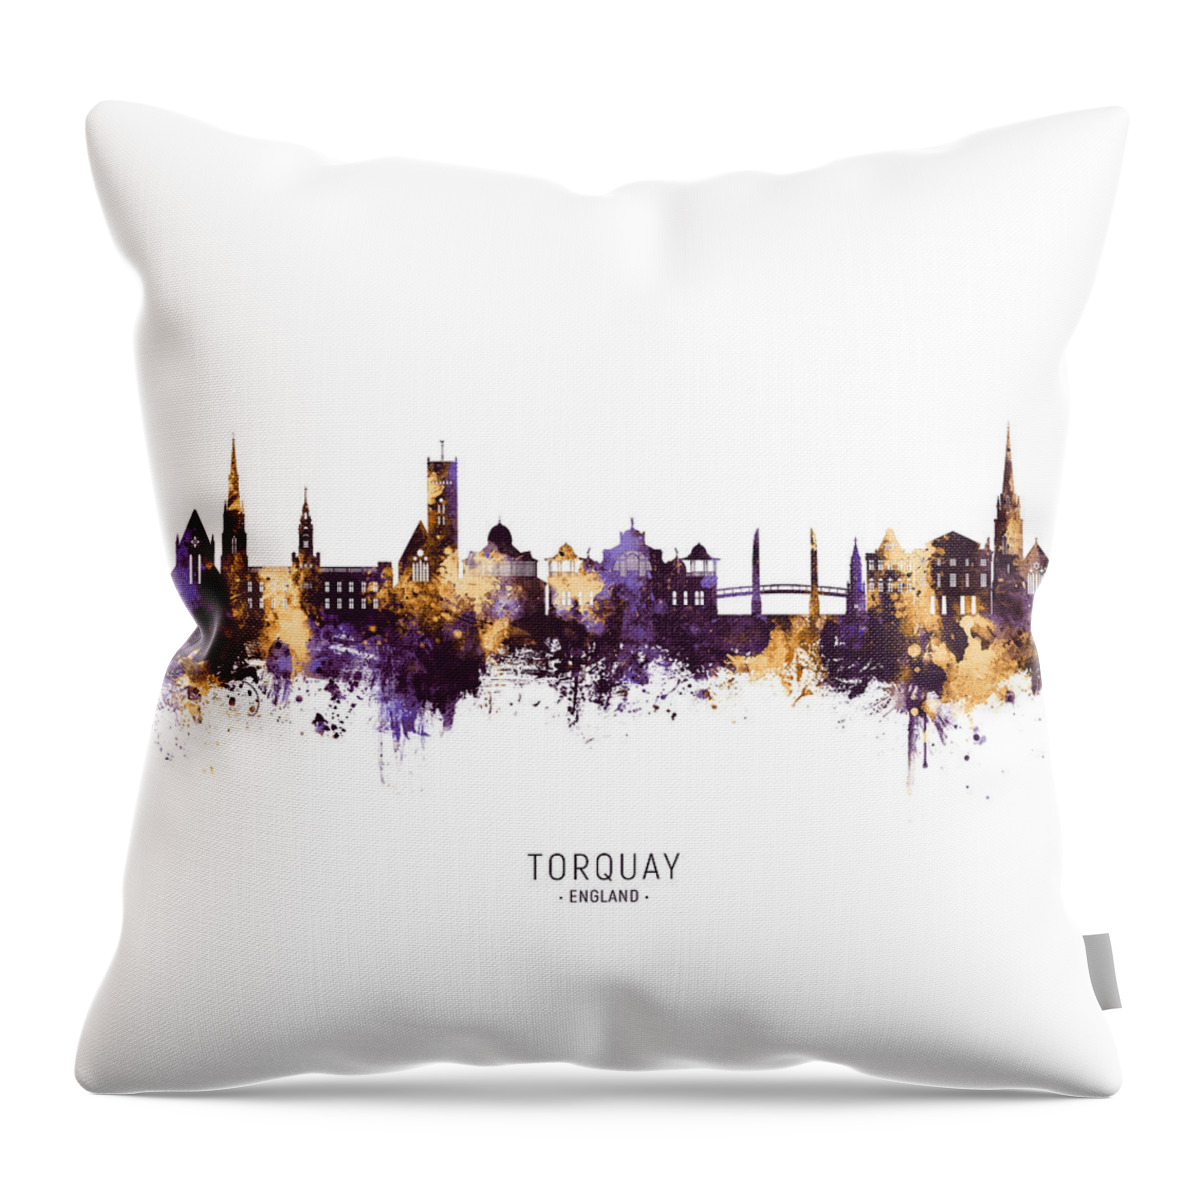 Torquay Throw Pillow featuring the digital art Torquay England Skyline #38 by Michael Tompsett